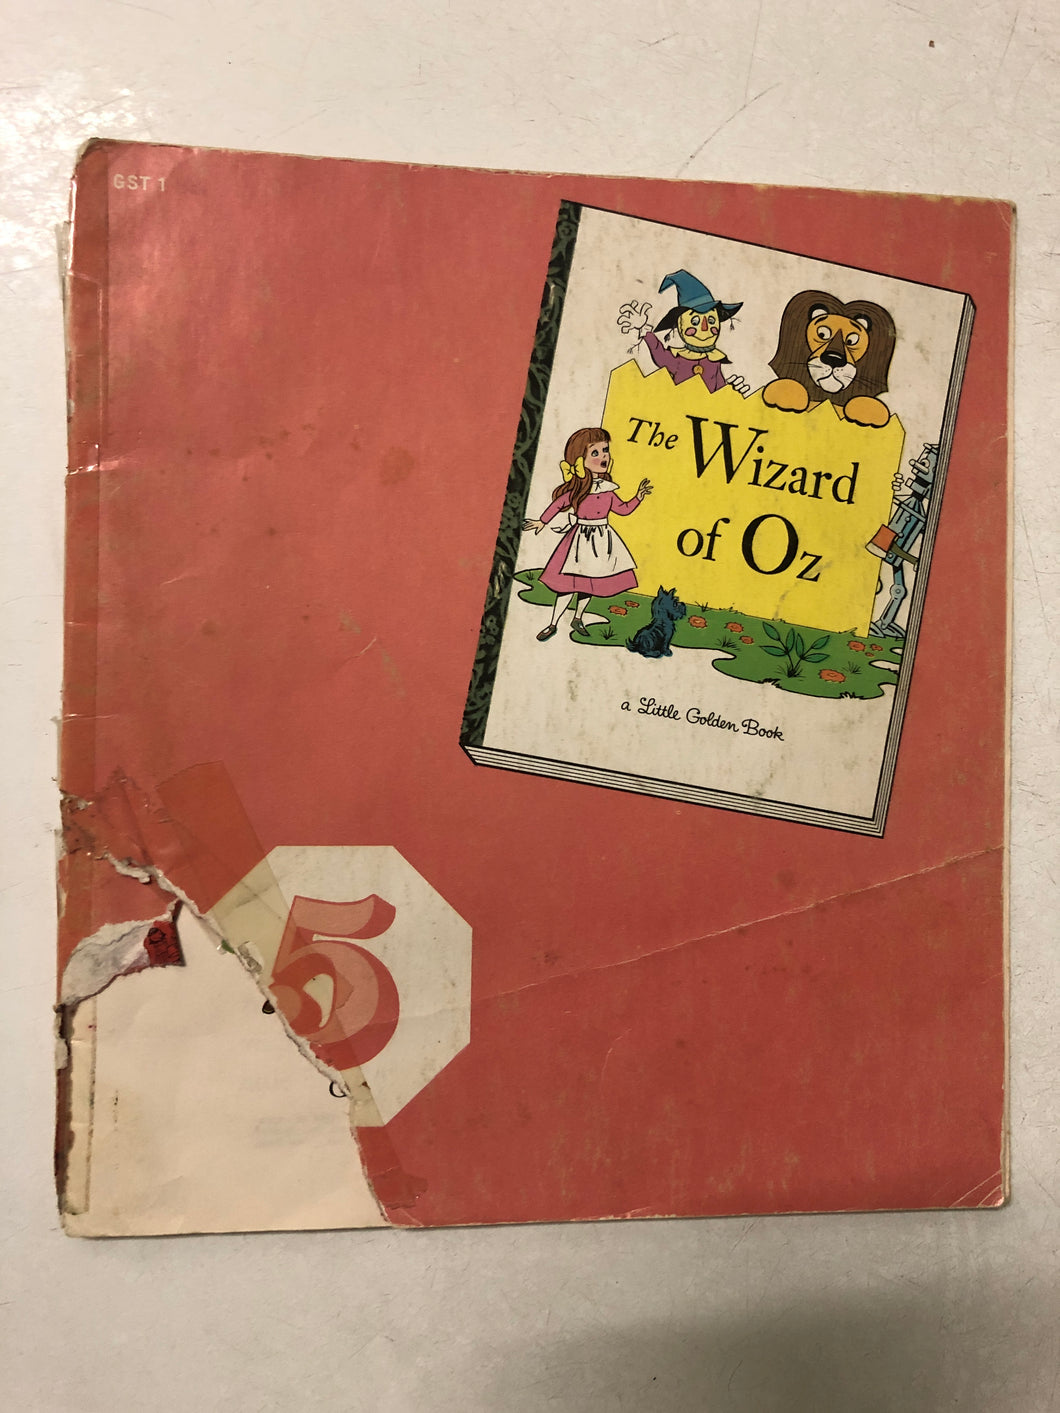 The Wizard of Oz - Slick Cat Books 